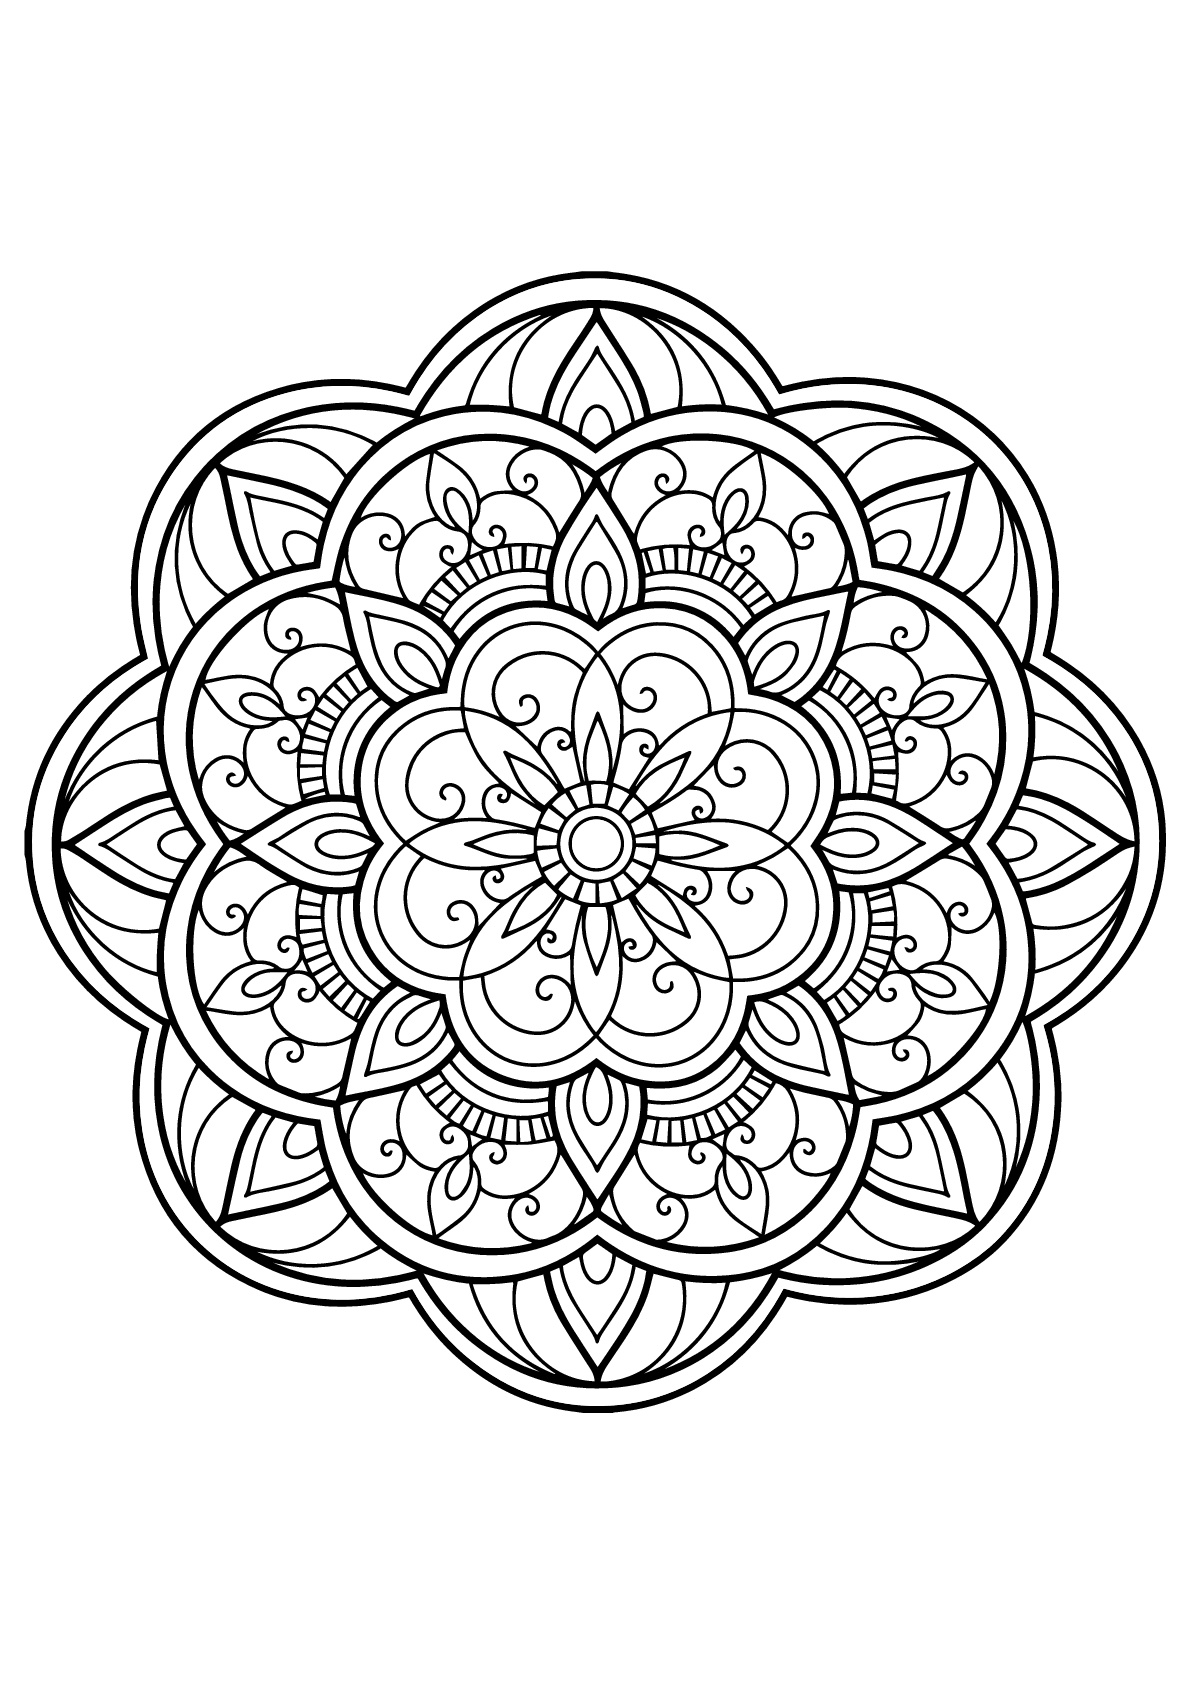 Mandala mit abgerundeten Mustern aus Free Coloring book for adults